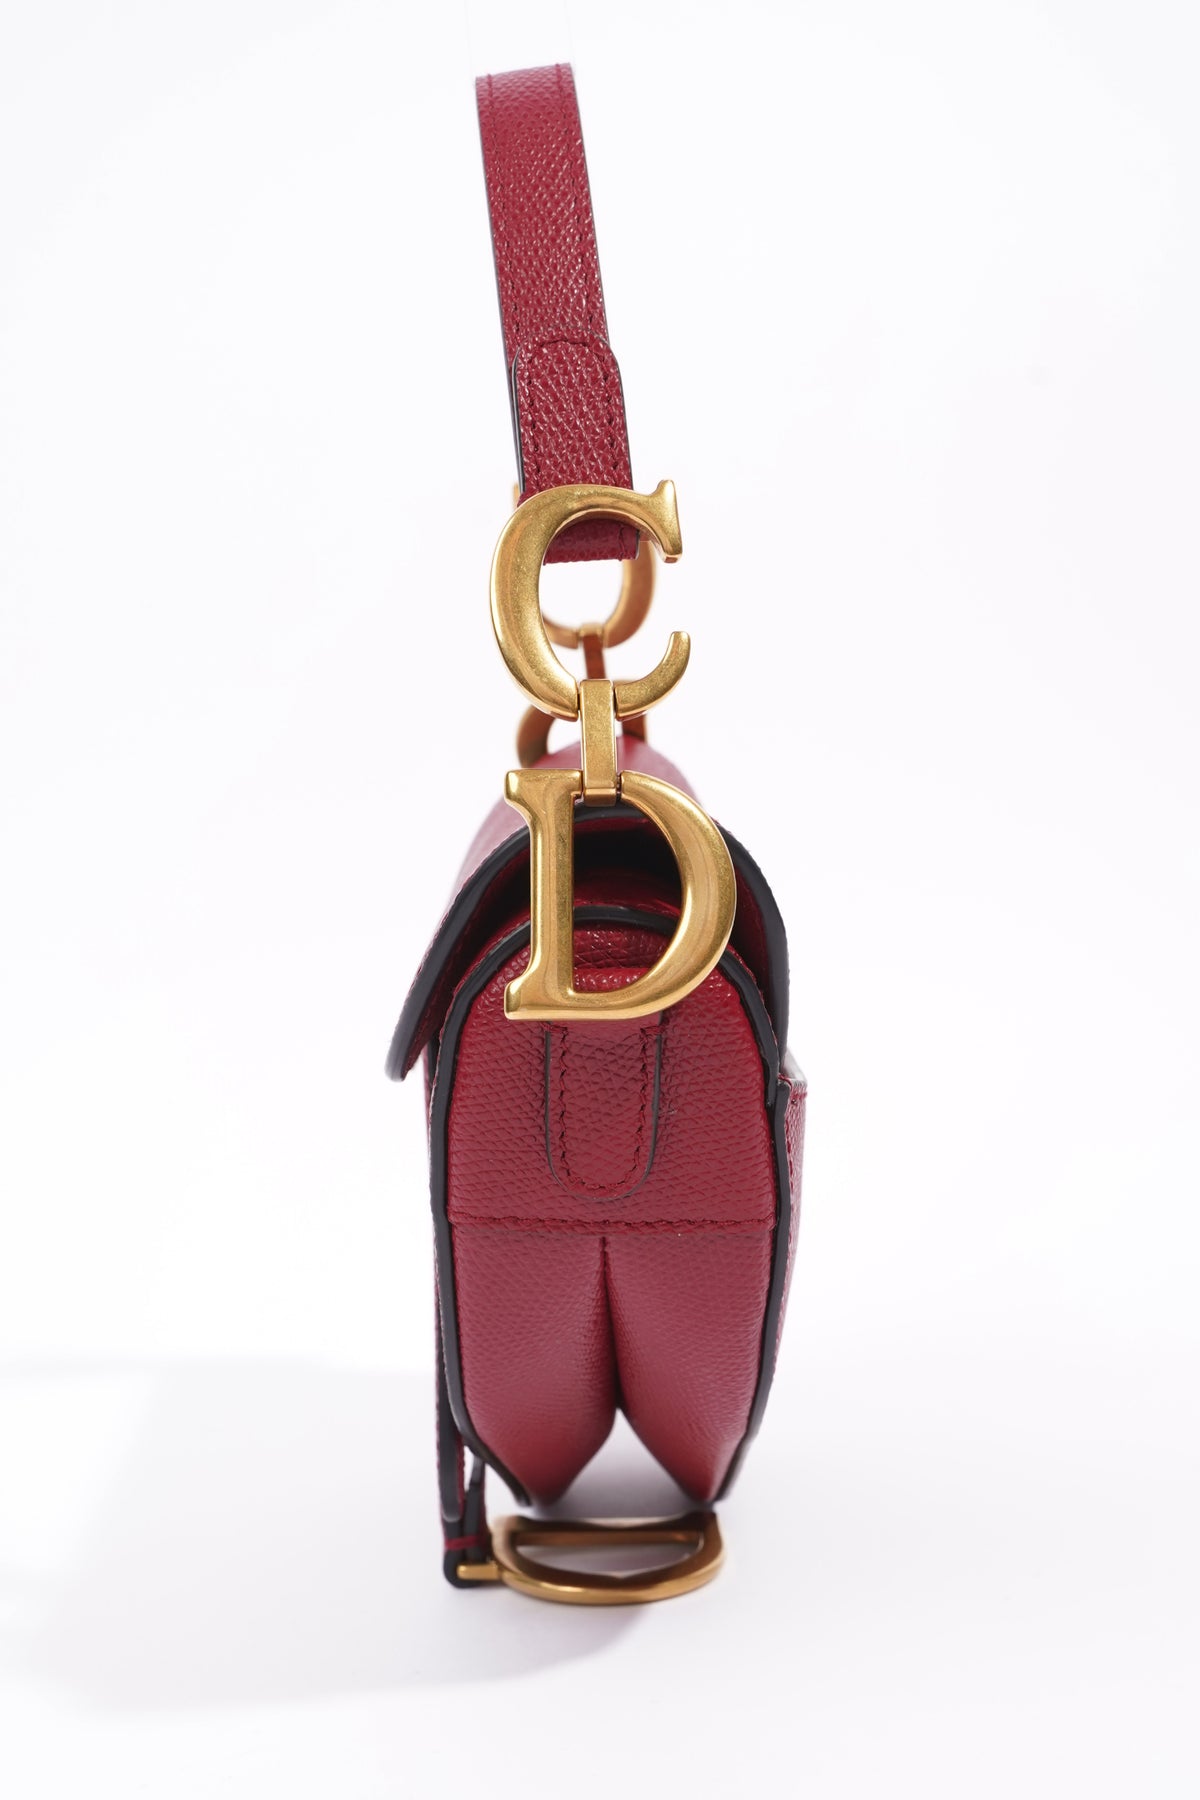 Christian Dior Cherry Red Mini Saddle Bag